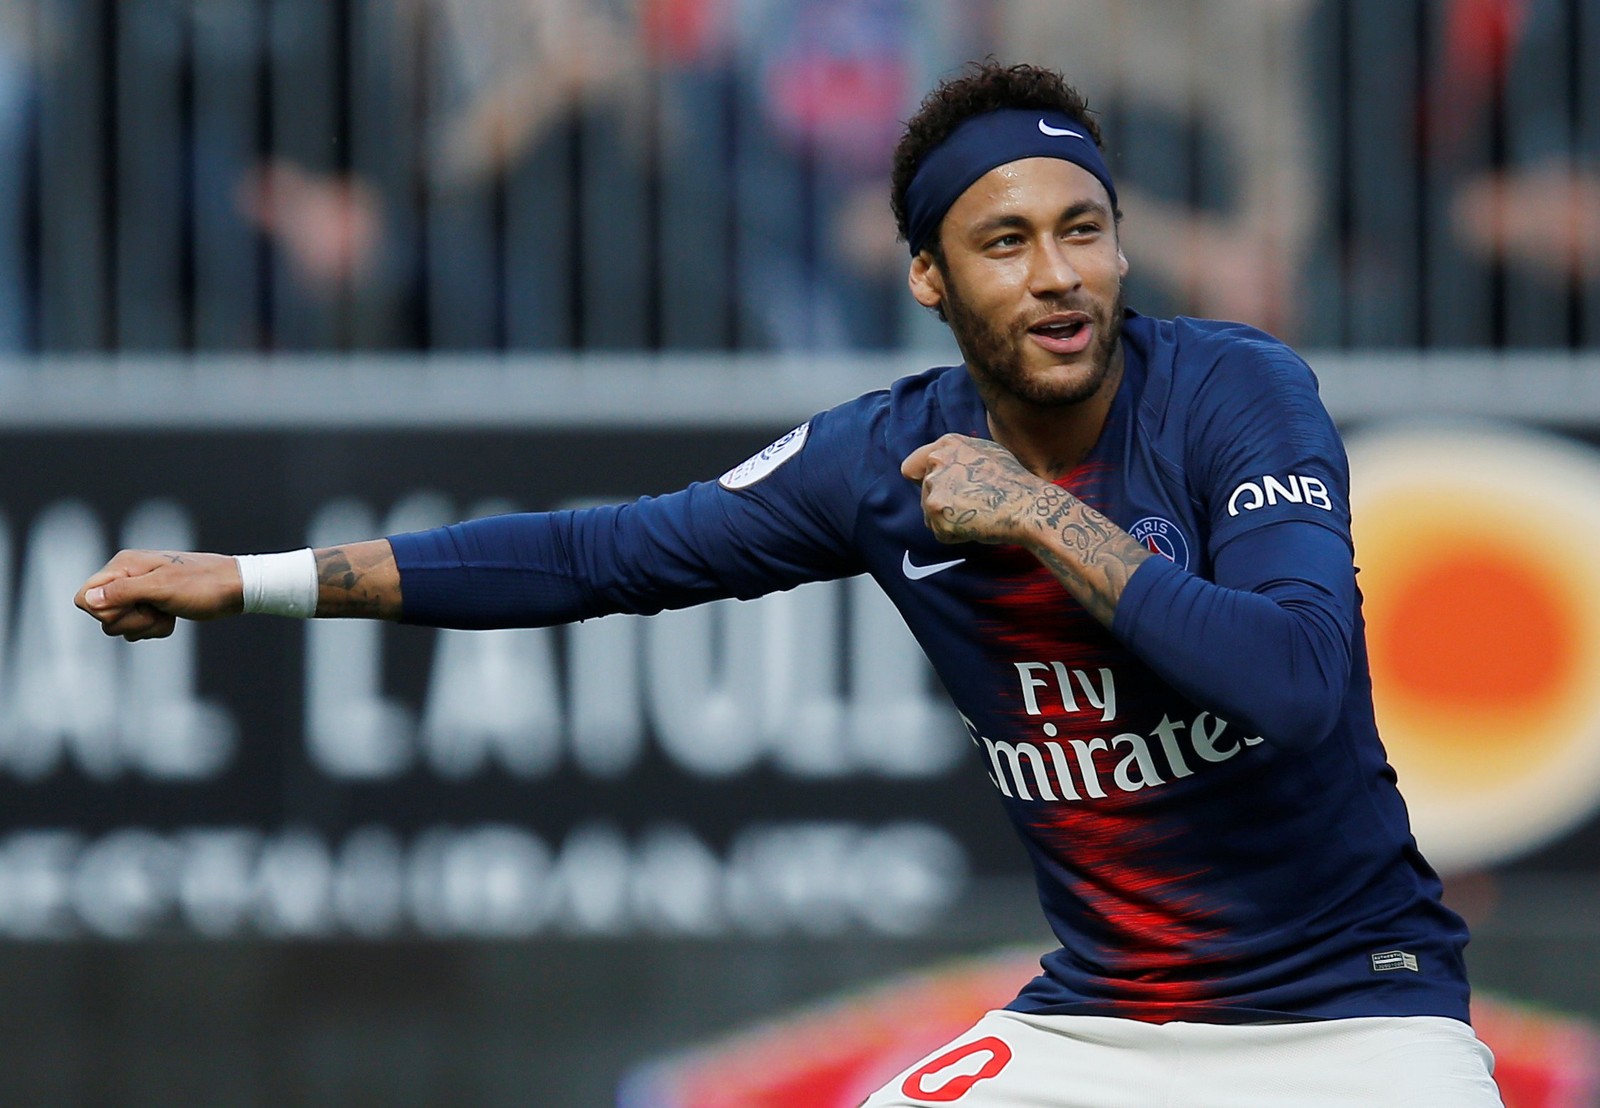 PSG quer R$ 1,3 bilhão para vender Neymar, diz jornal francês